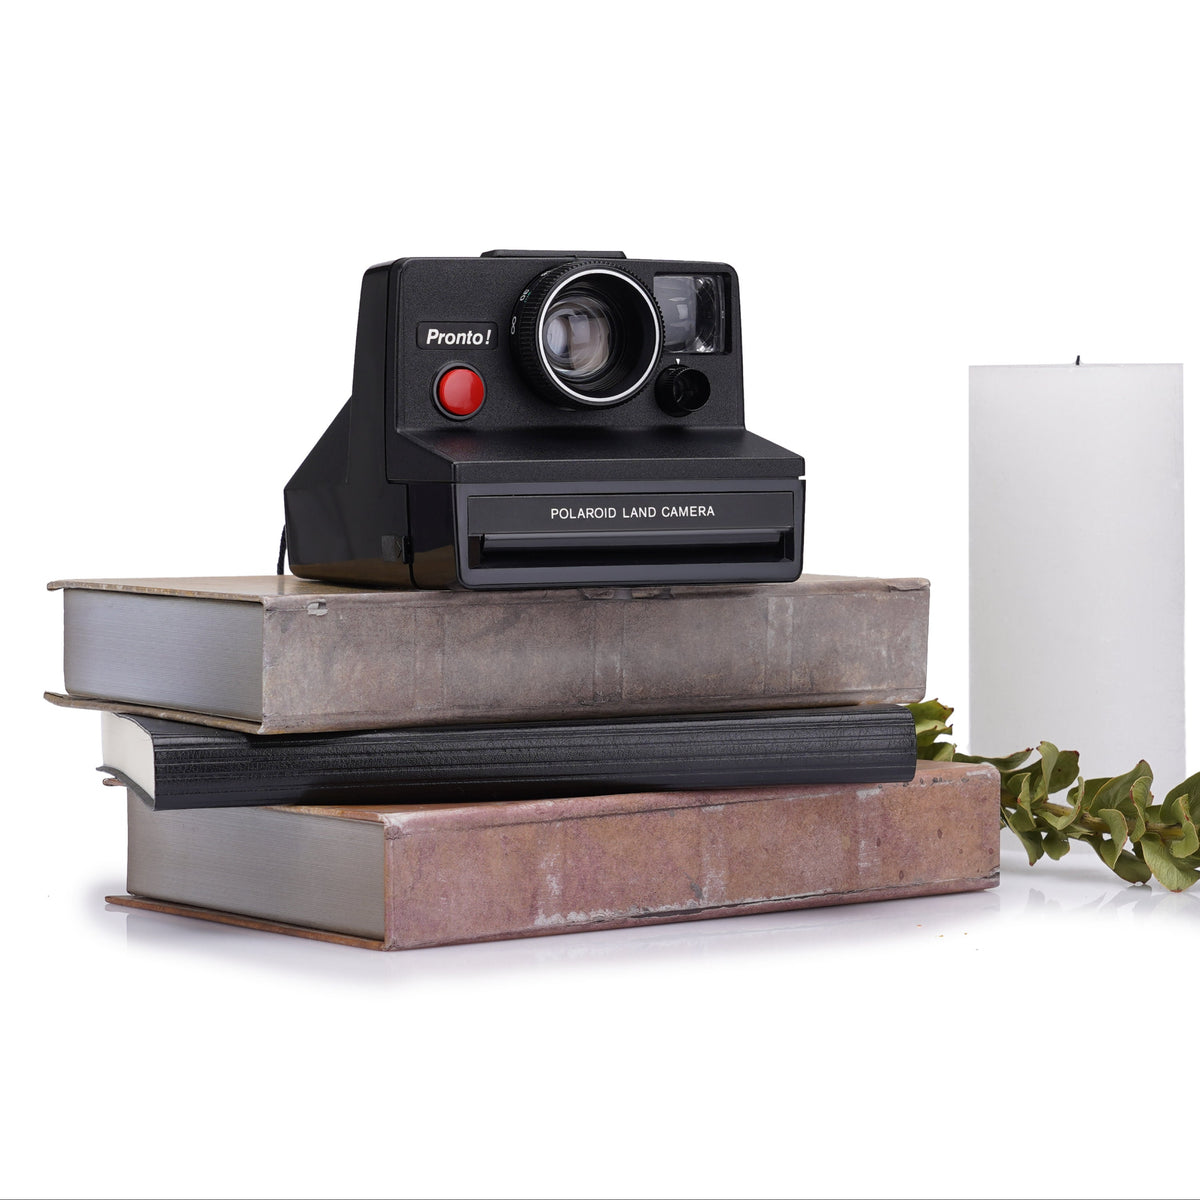 musical Perceptivo crecer Vintage Polaroid Land Camera Pronto! Black with Red Button – Vintage  Polaroid Instant Cameras